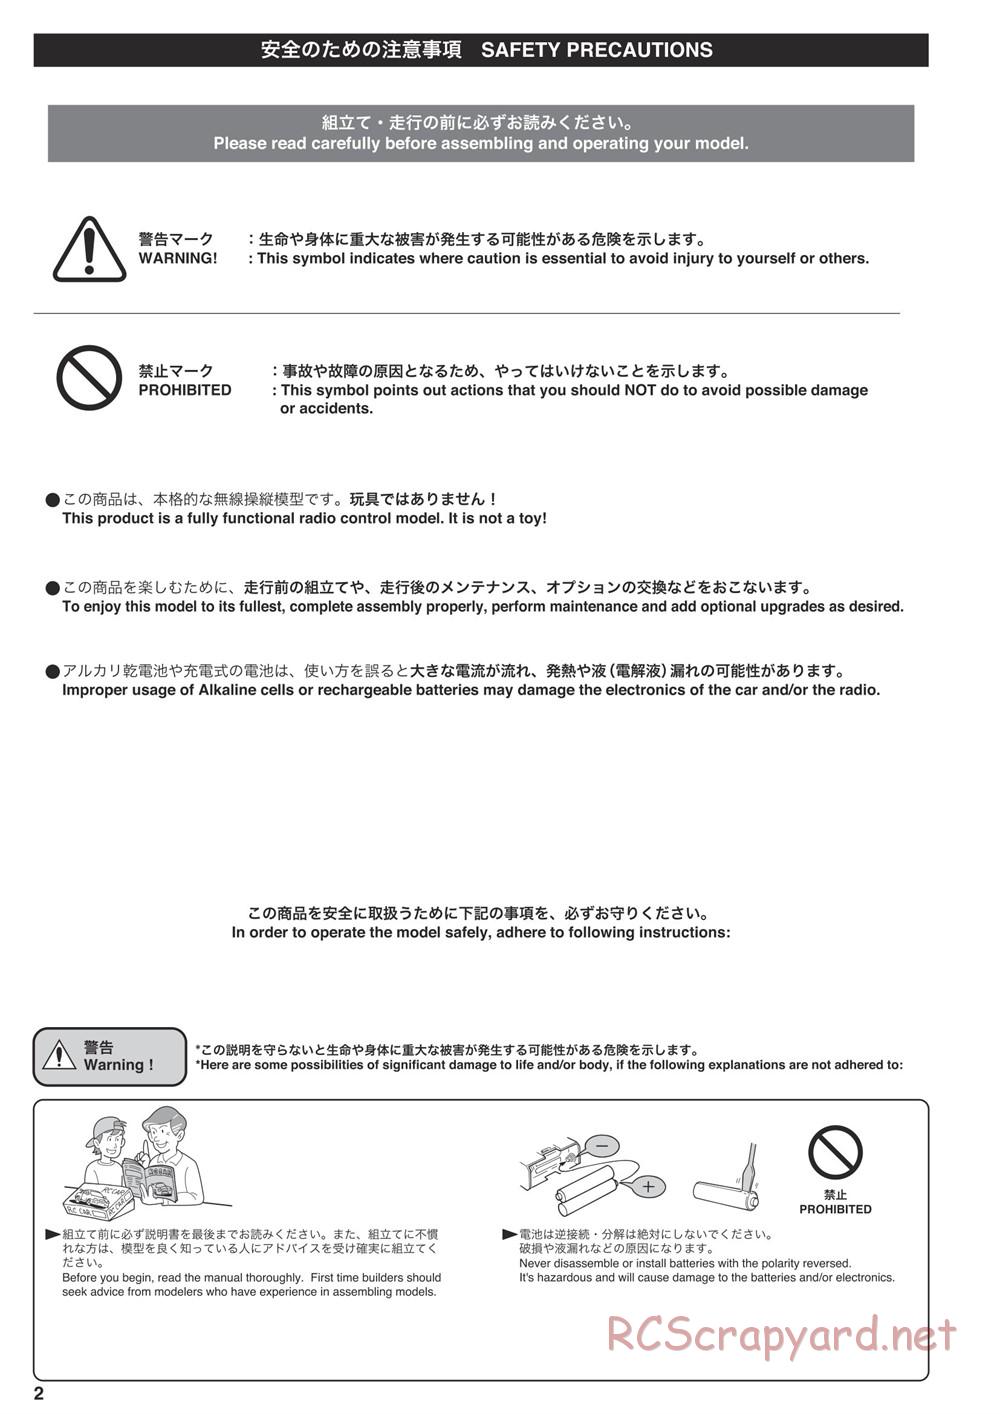 Kyosho - V-One RRR Shimo - Manual - Page 2